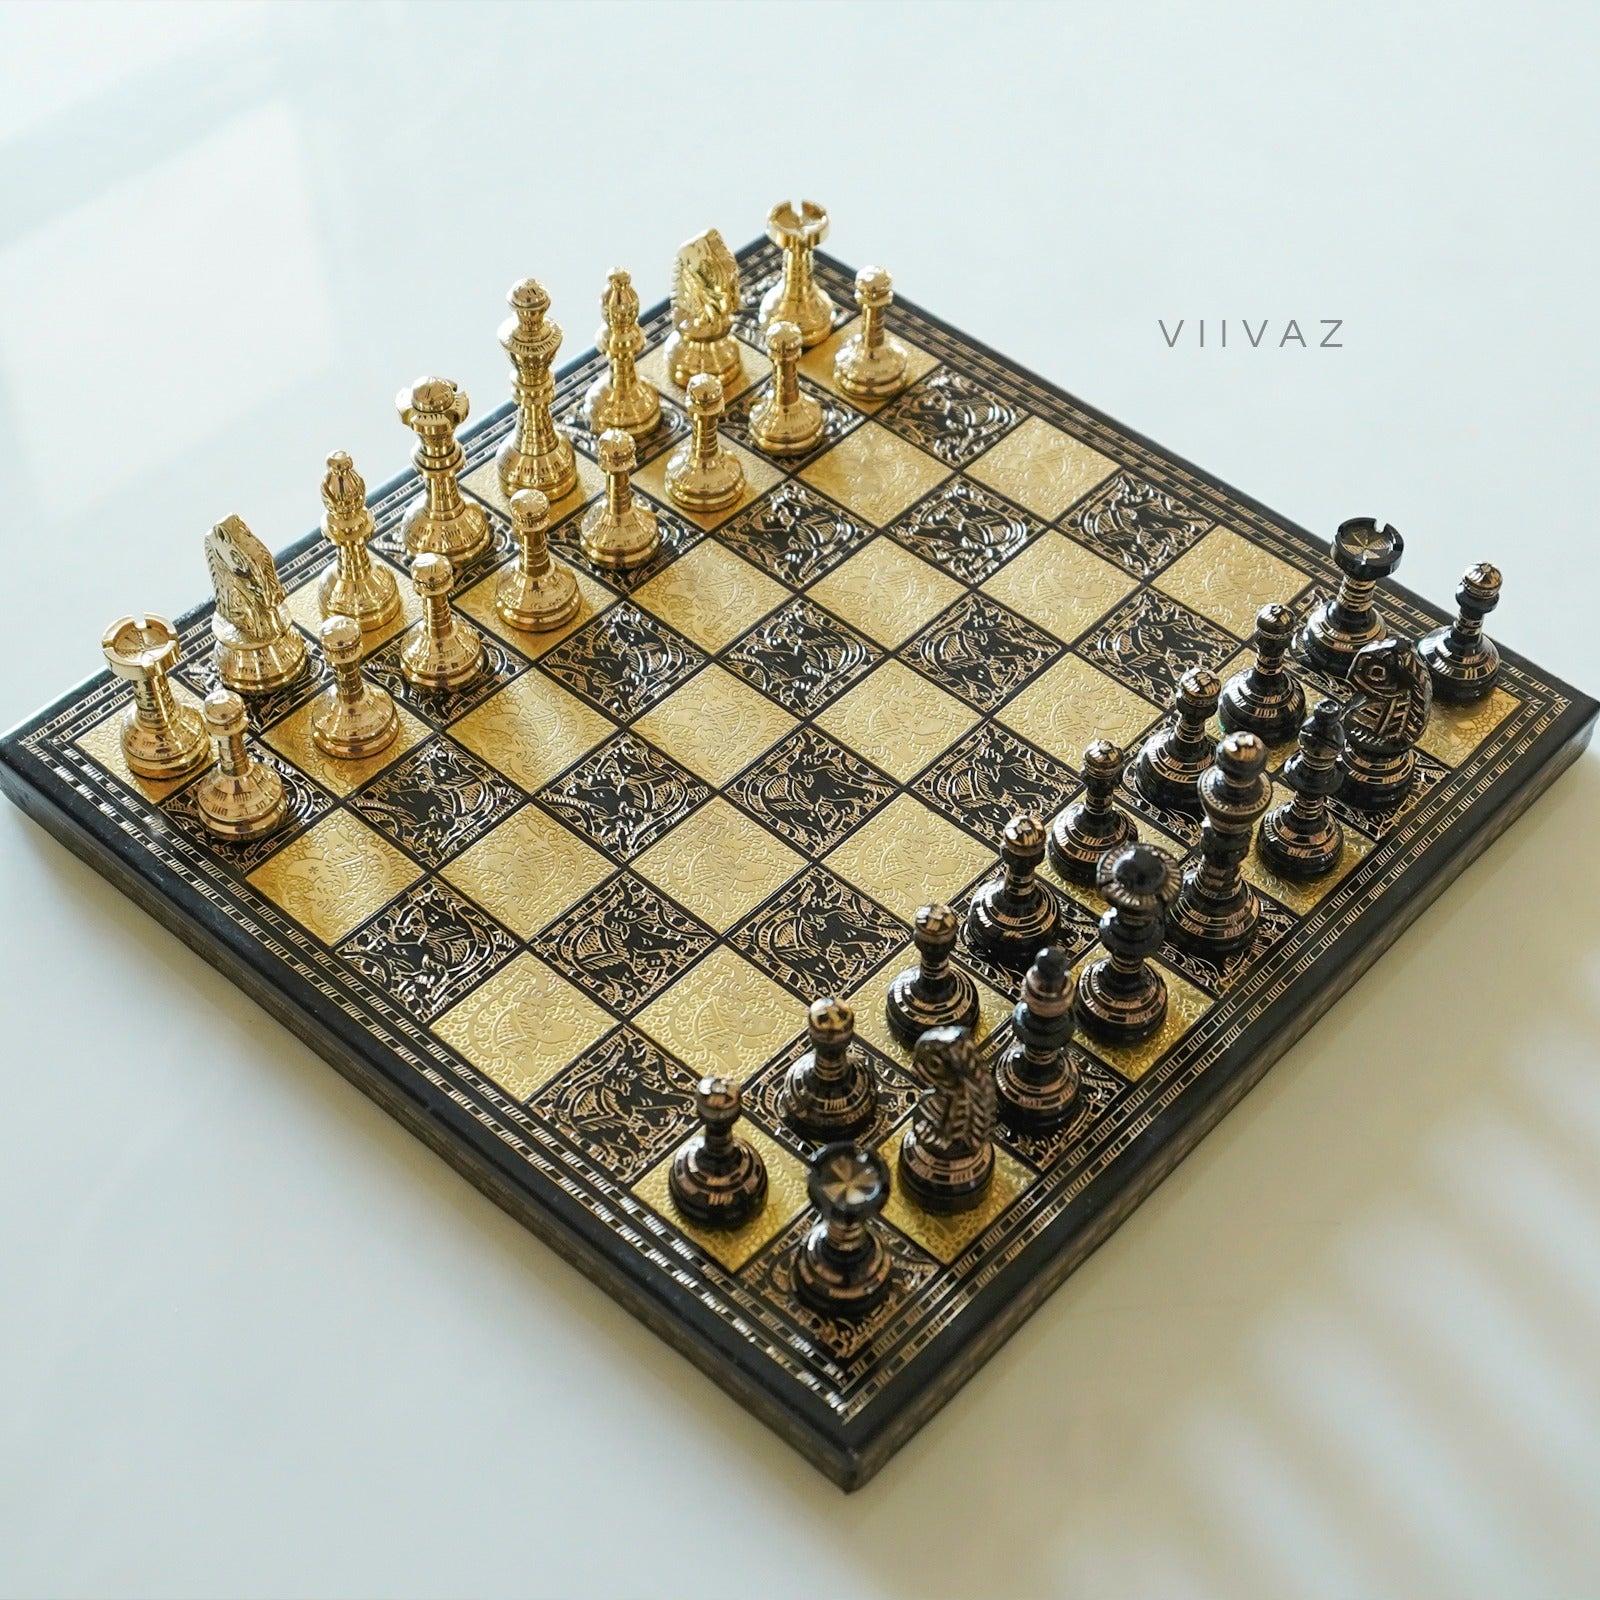 Luxury Brass Chess-VIIVAZ